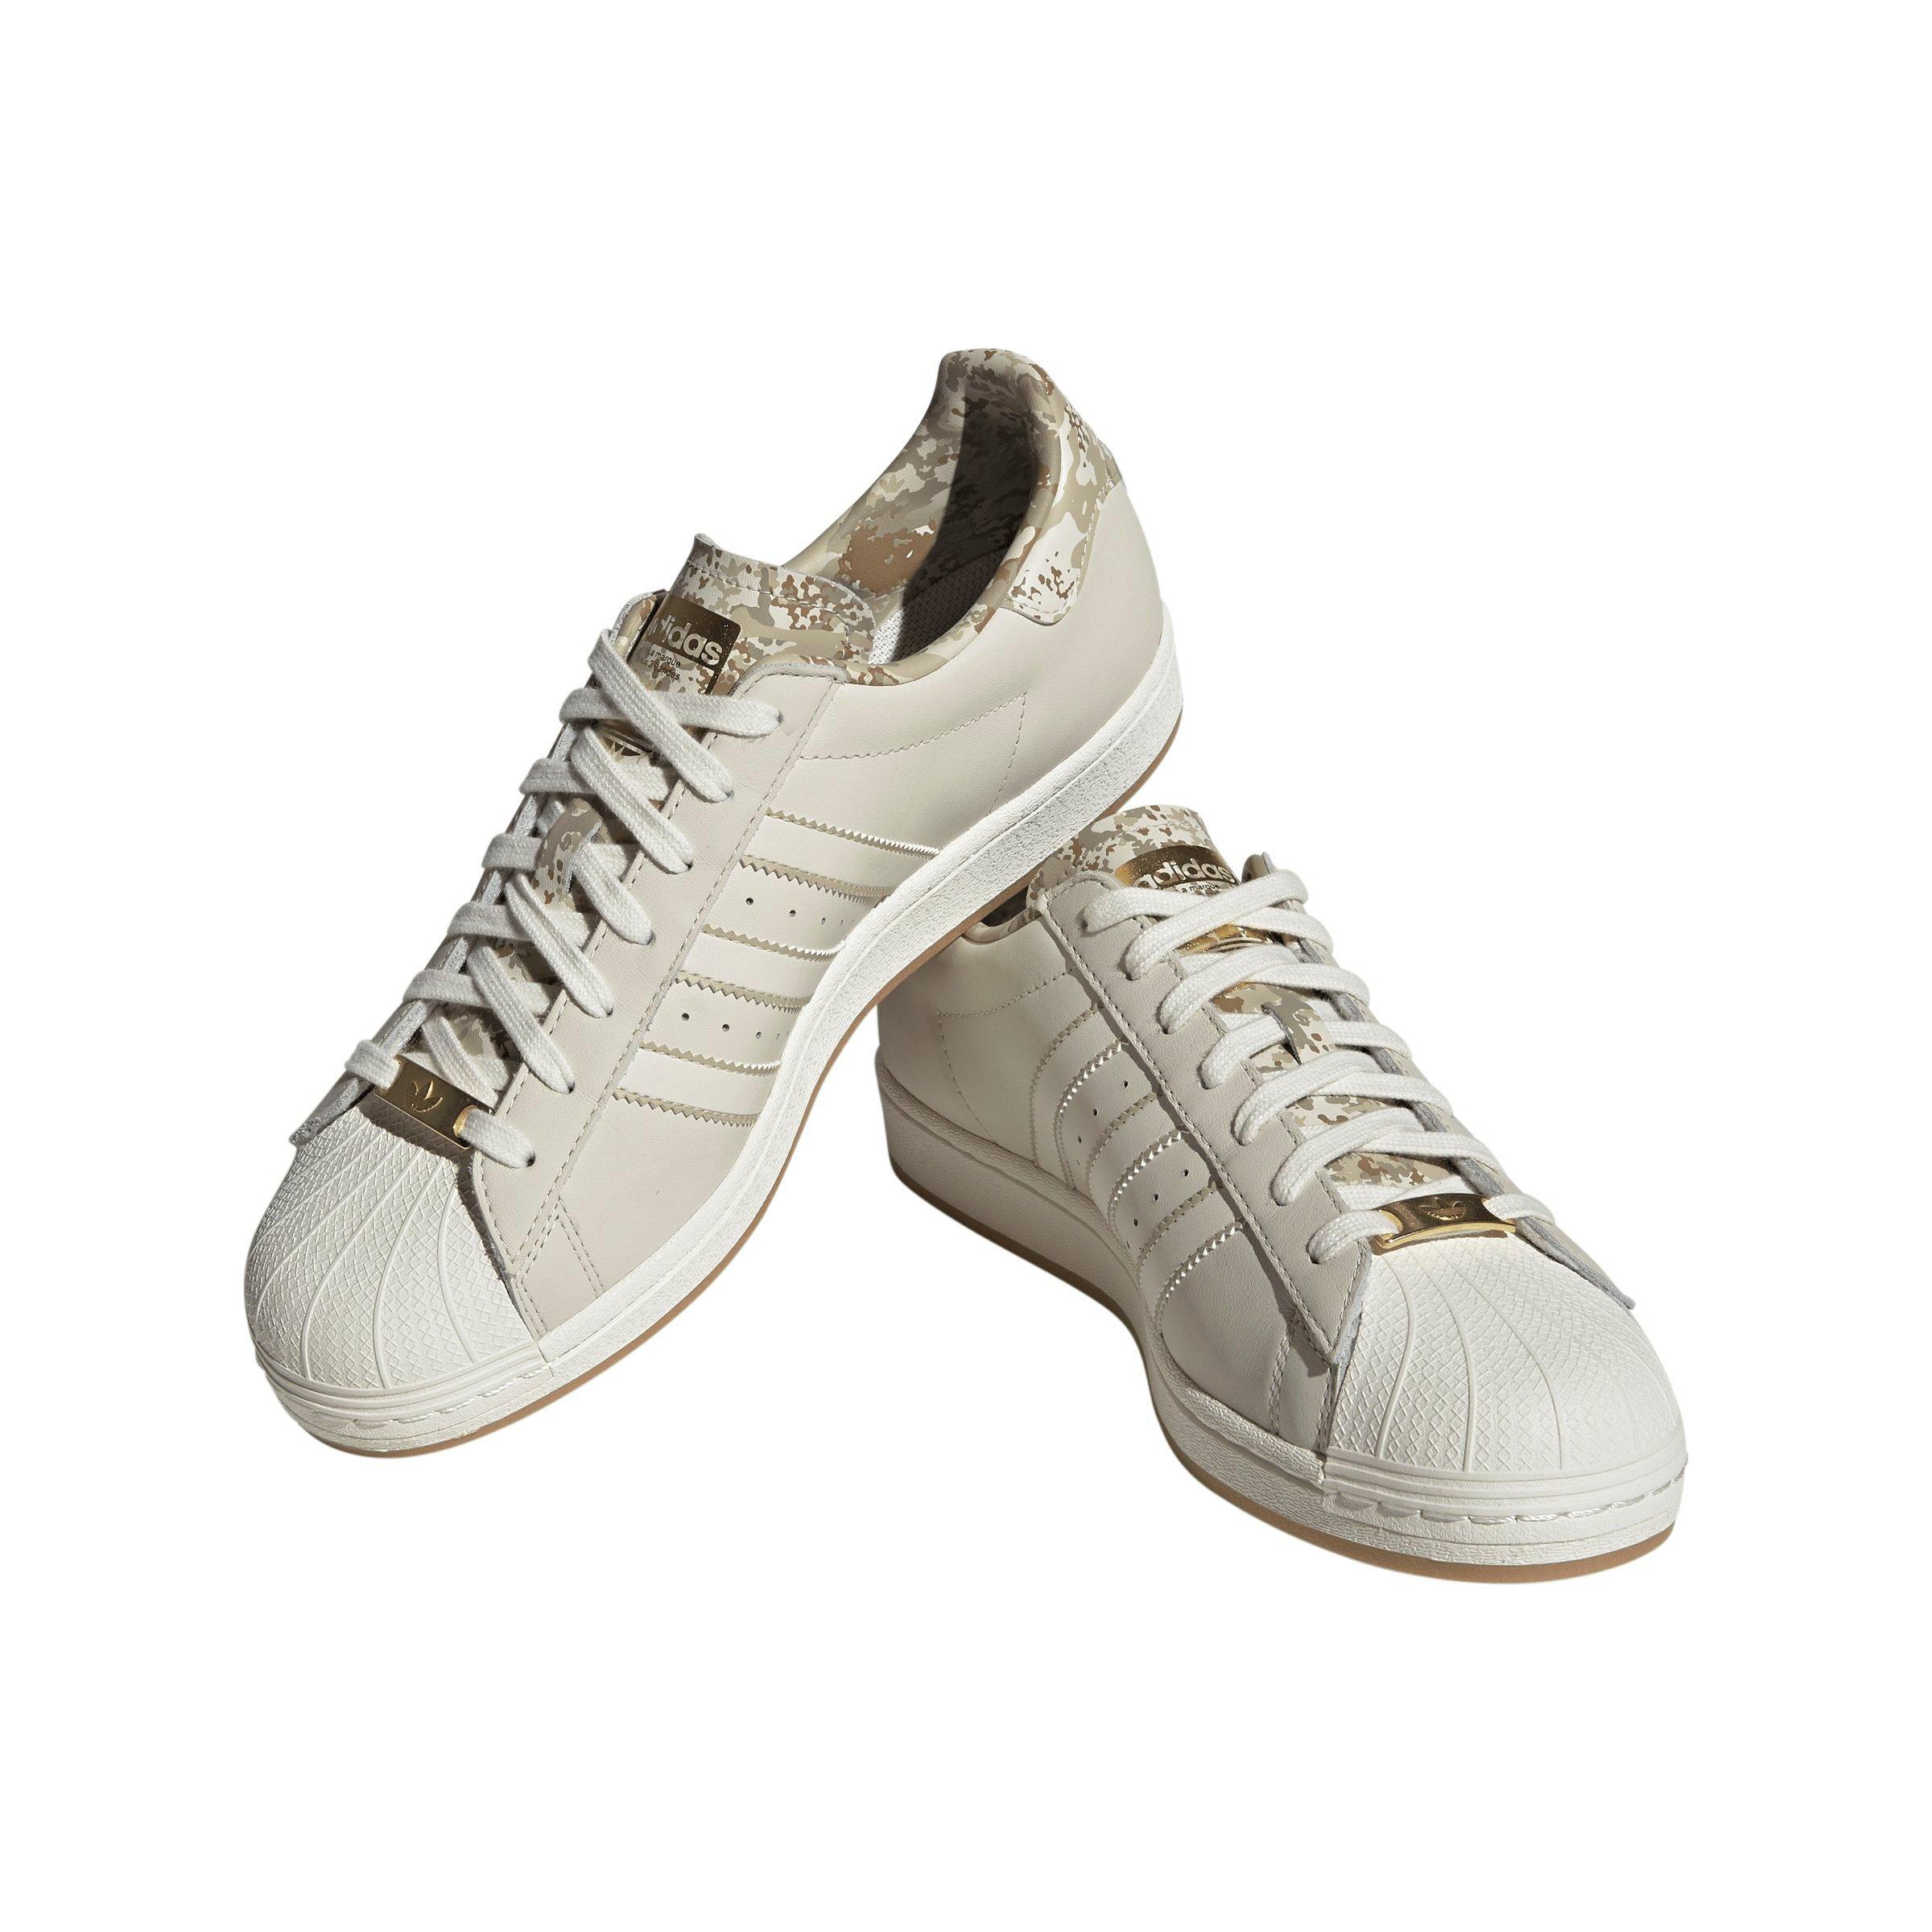 Adidas Originals Superstar Alumina/Alumina/Off White Men's Shoes, Size: 13